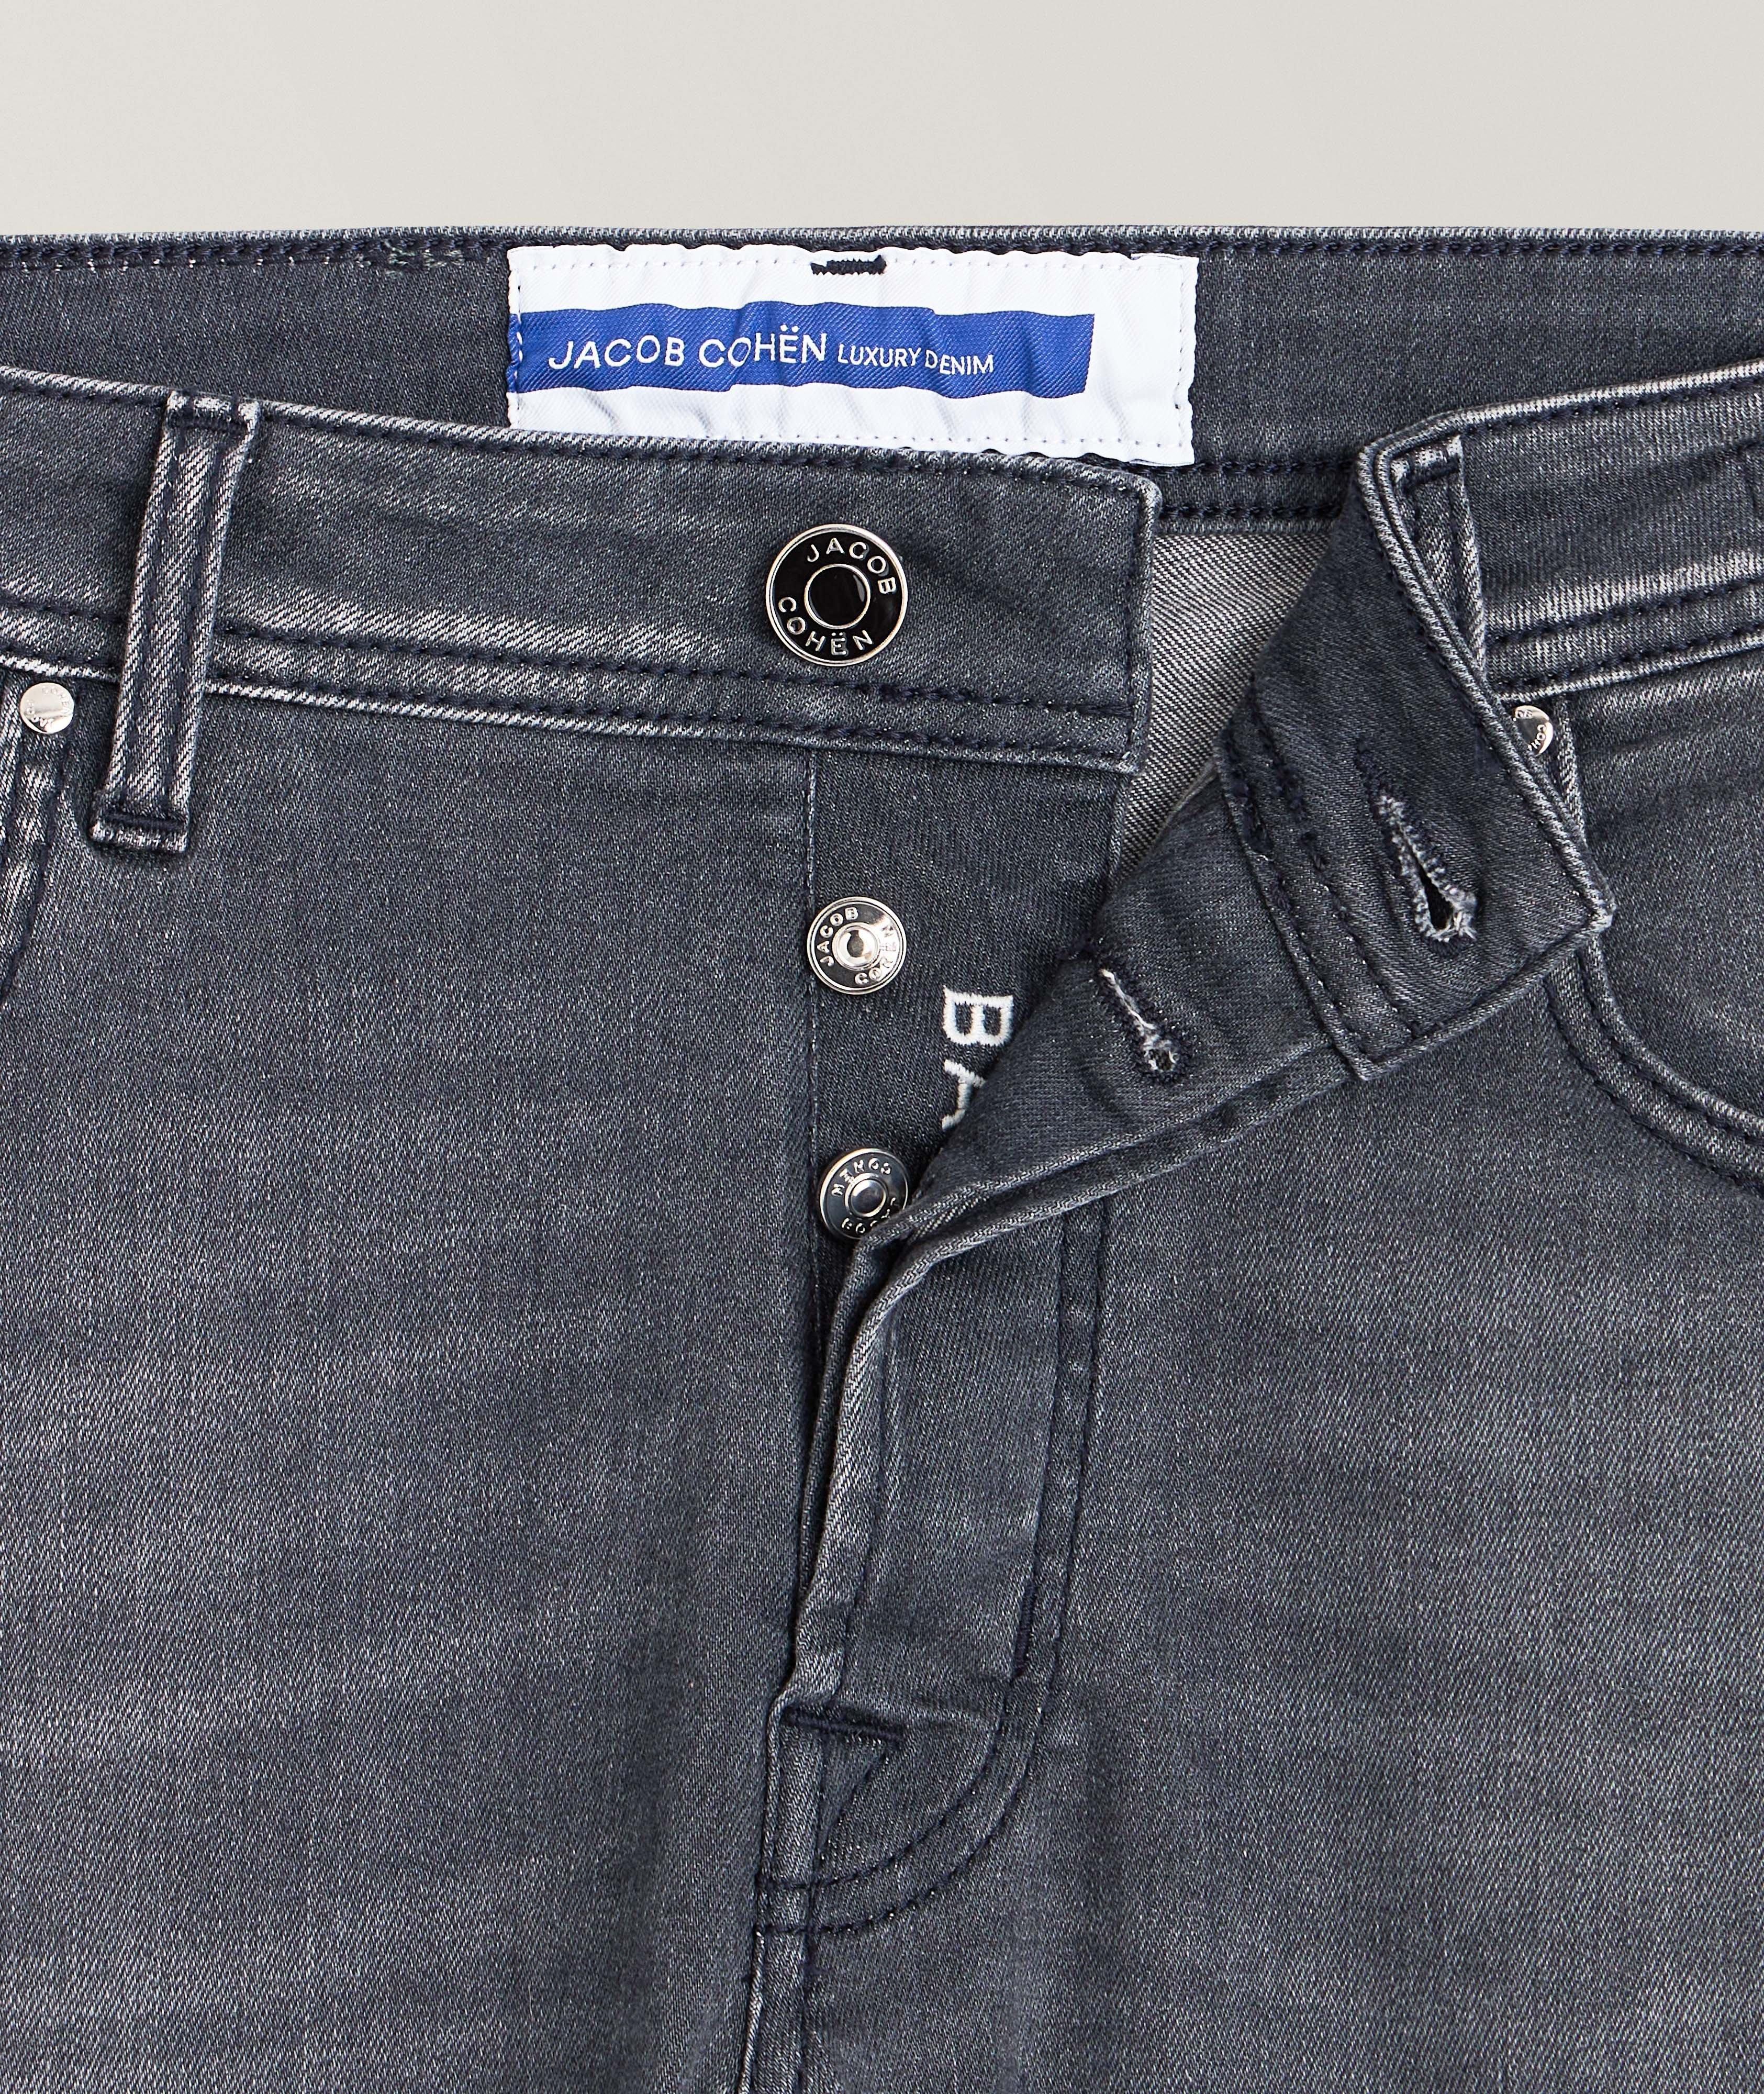 Bard Stretch-Cotton Blend Jeans image 1